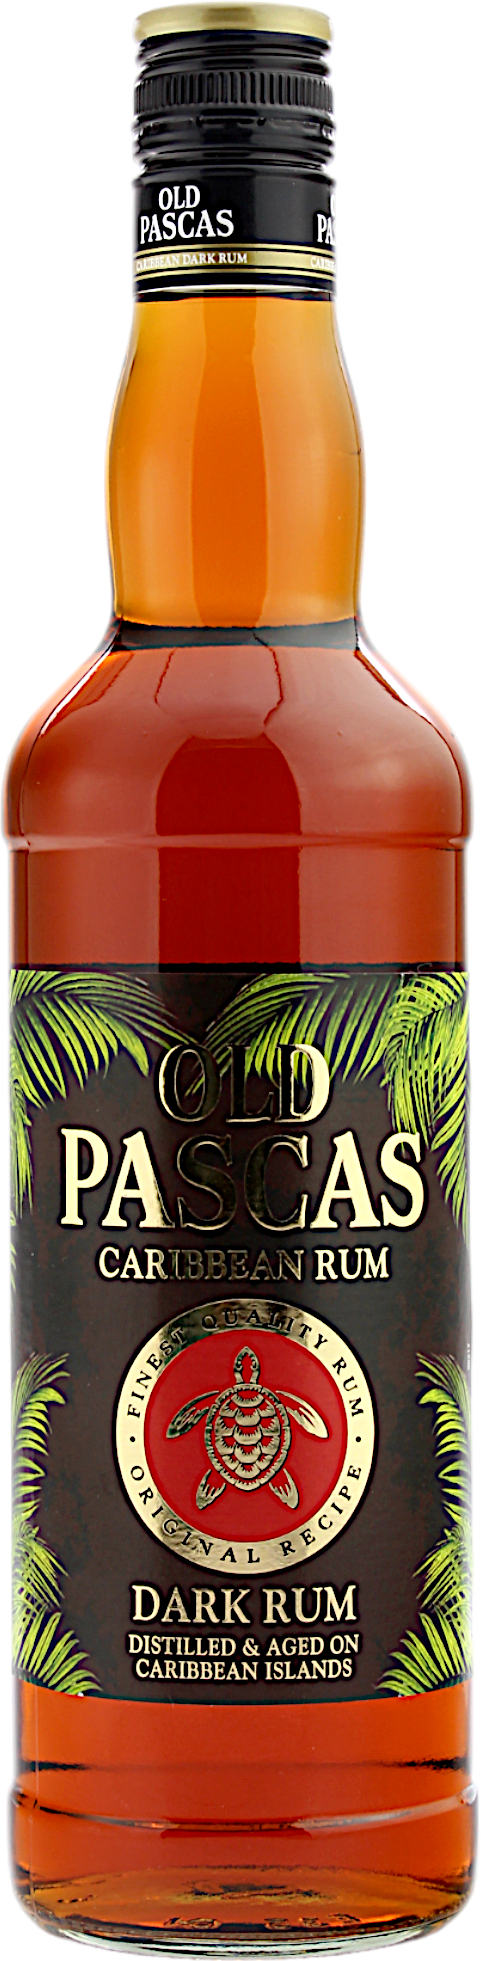 Old Pascas Dark Rum 37.5% 0,7l